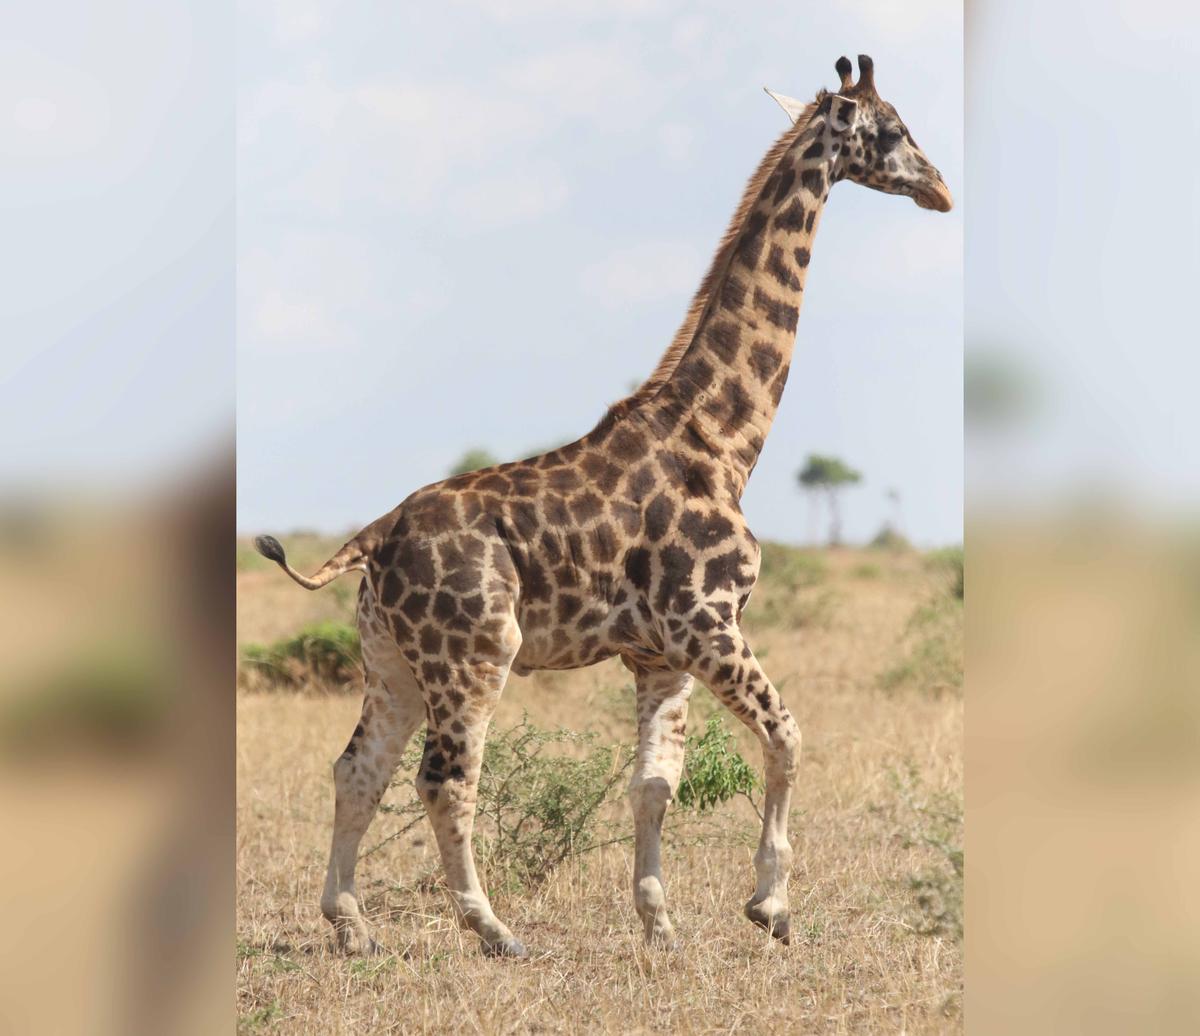 (Courtesy of Michael Brown/<a href="https://giraffeconservation.org/">Giraffe Conservation Foundation</a>)